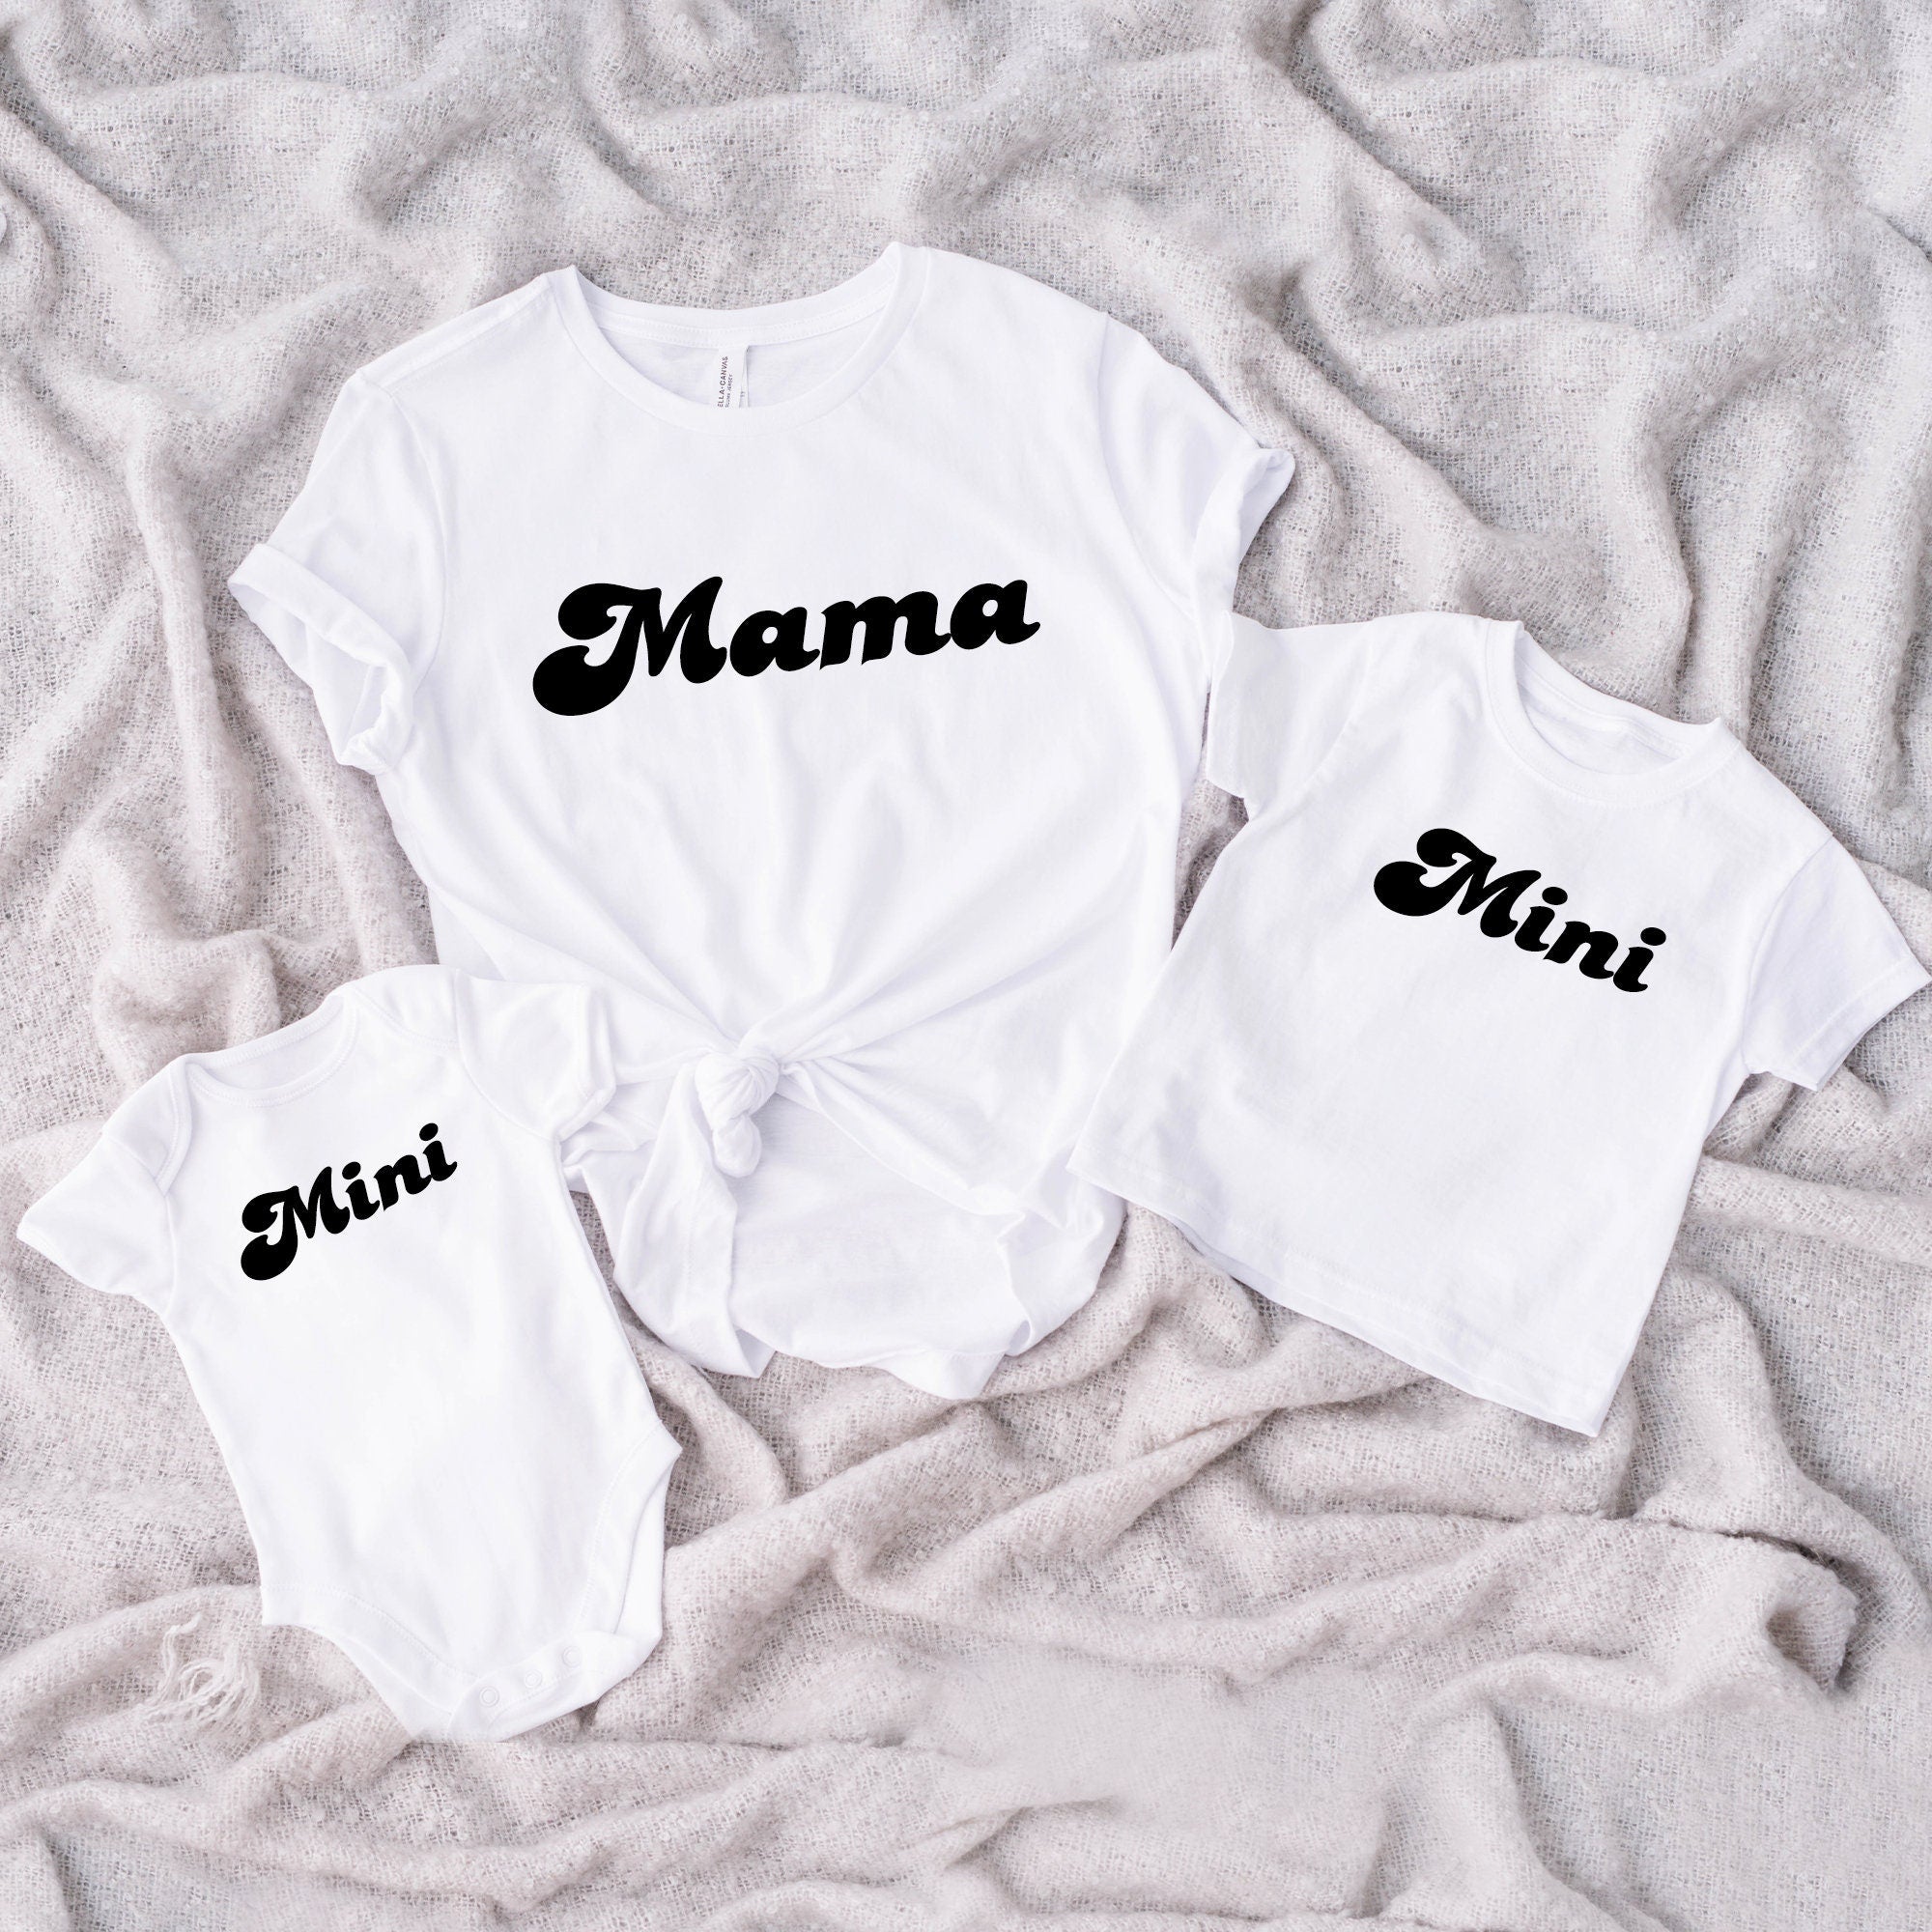 Mommy and Me Shirts, Matching Family Shirts, Baby Life Shirt, Family Matching Shirt, Mom Kid Baby Matching Shirt